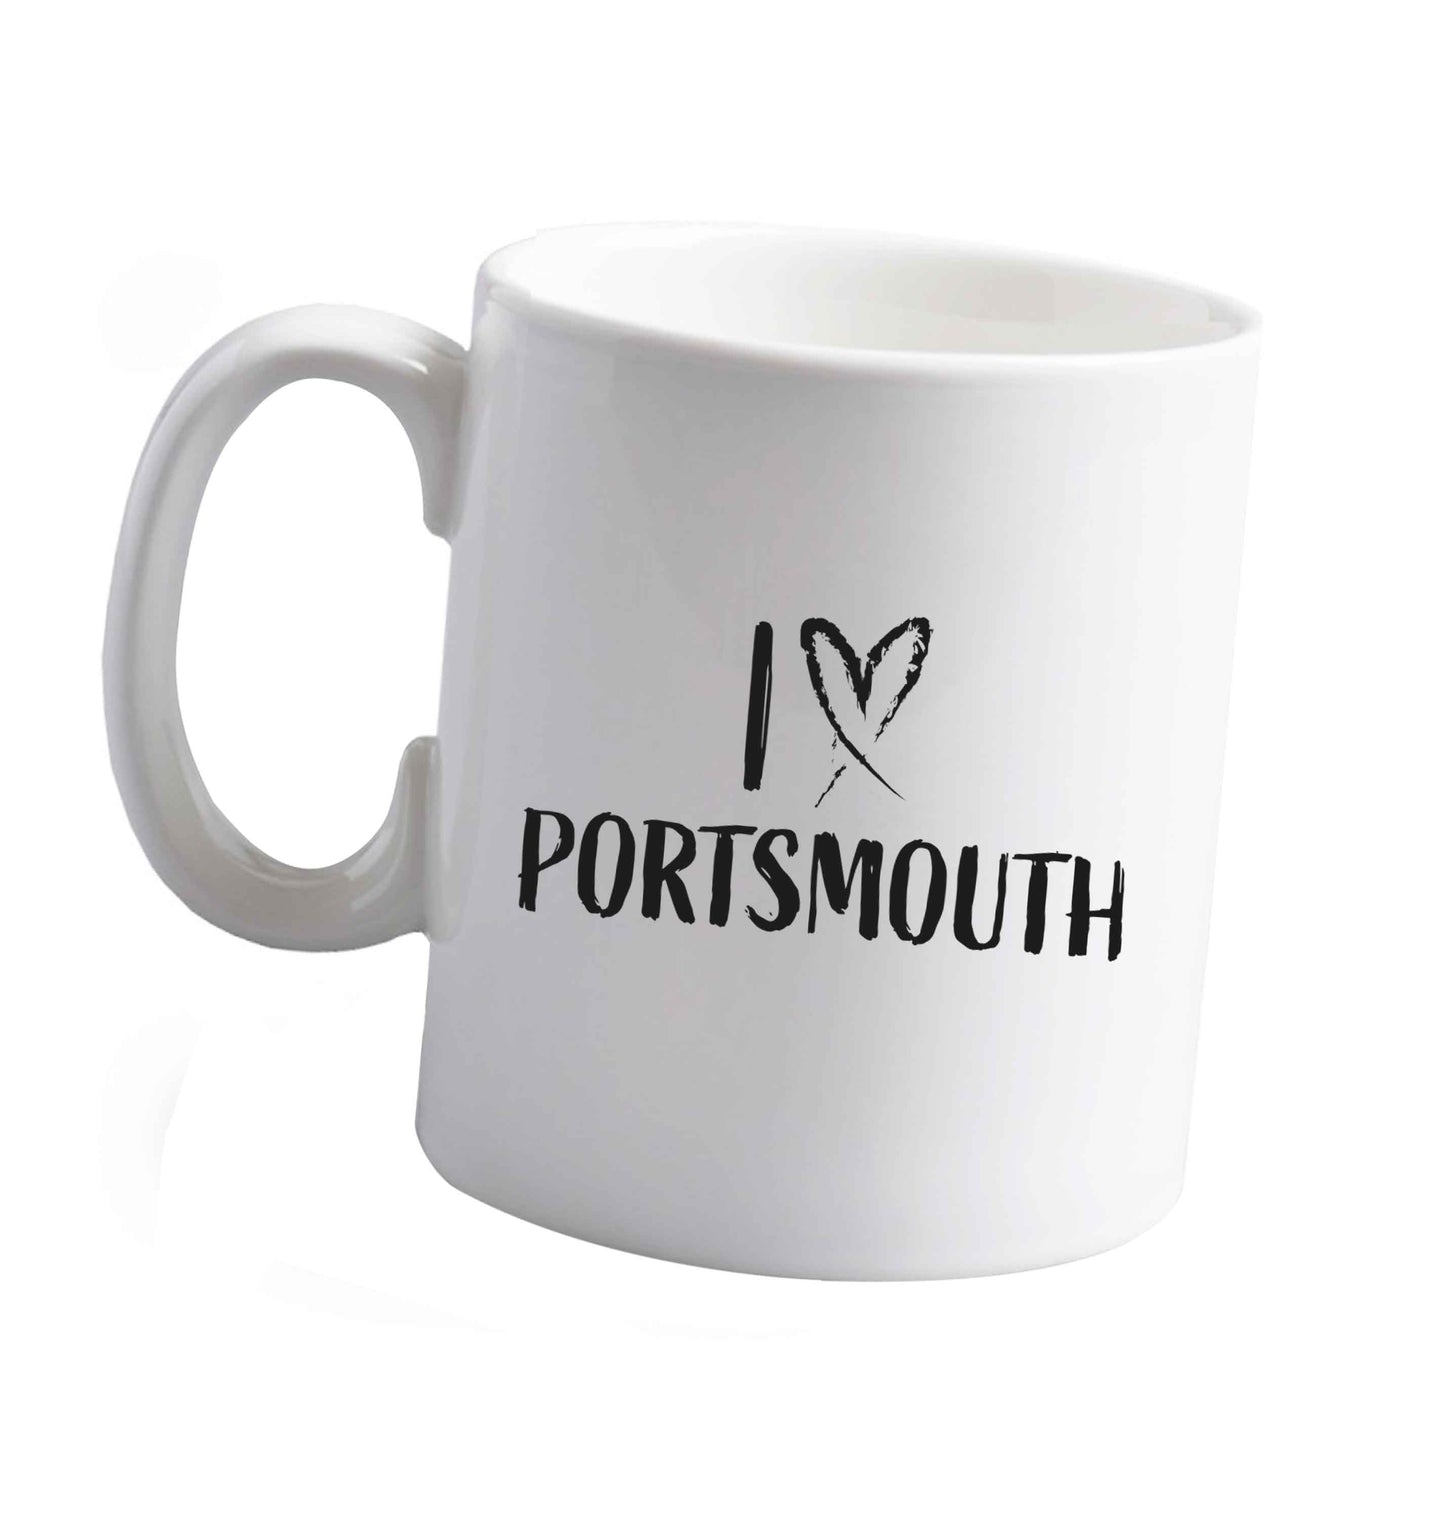 10 oz I love Portsmouth ceramic mug right handed